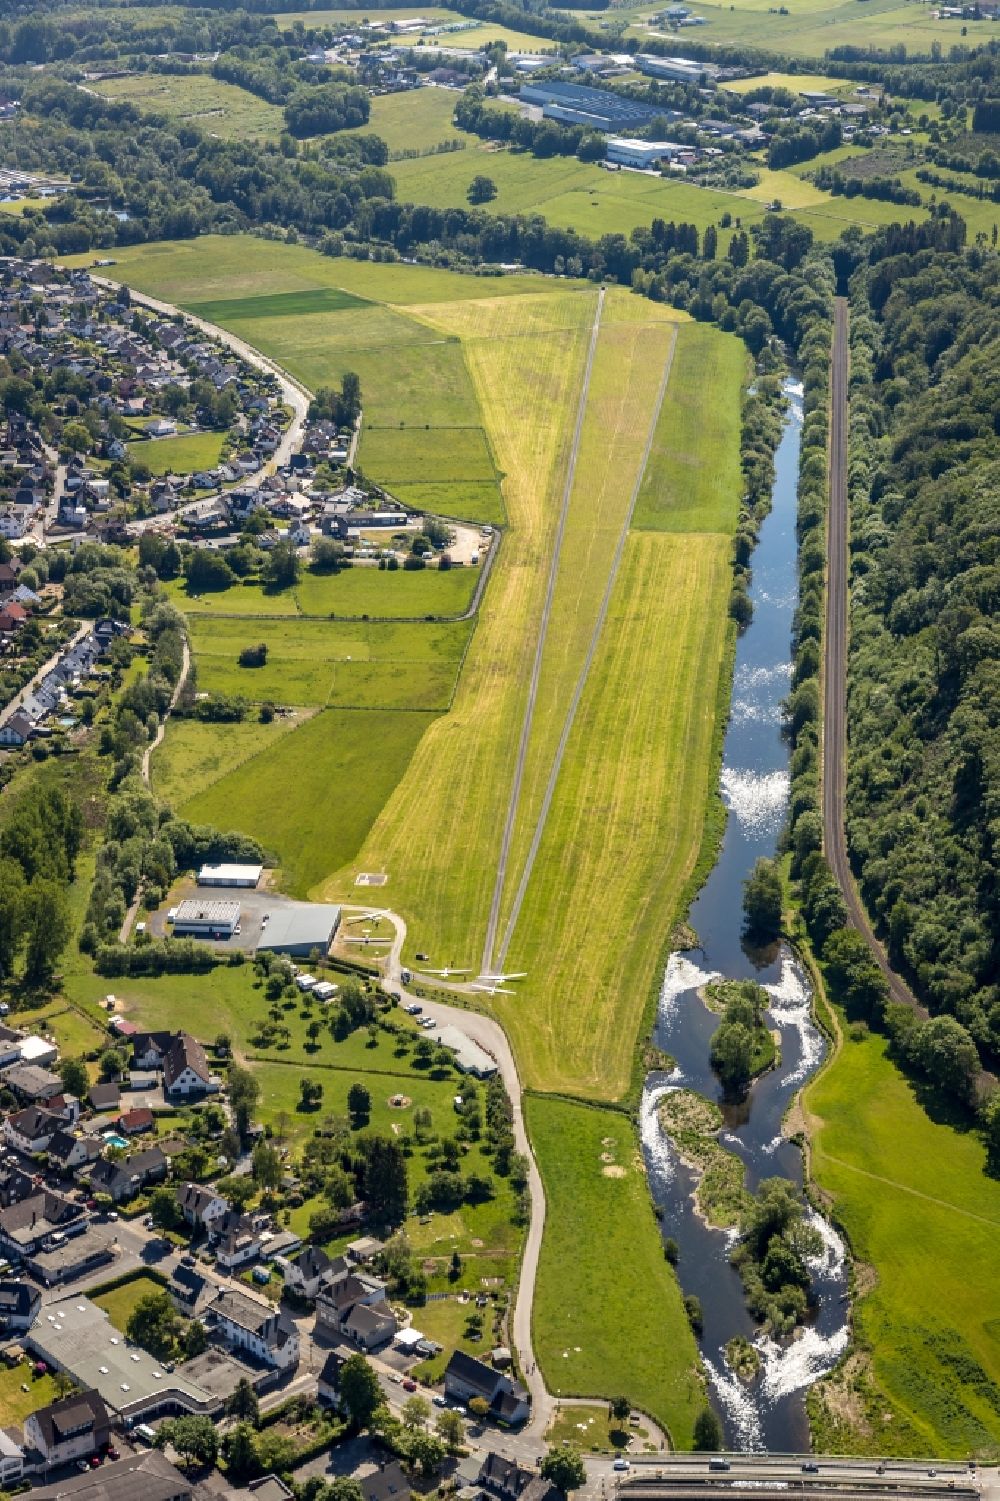 Arnsberg from the bird's eye view: Airfield Oeventrop in the district Oeventrop in Arnsberg in the state of North Rhine-Westphalia, Germany